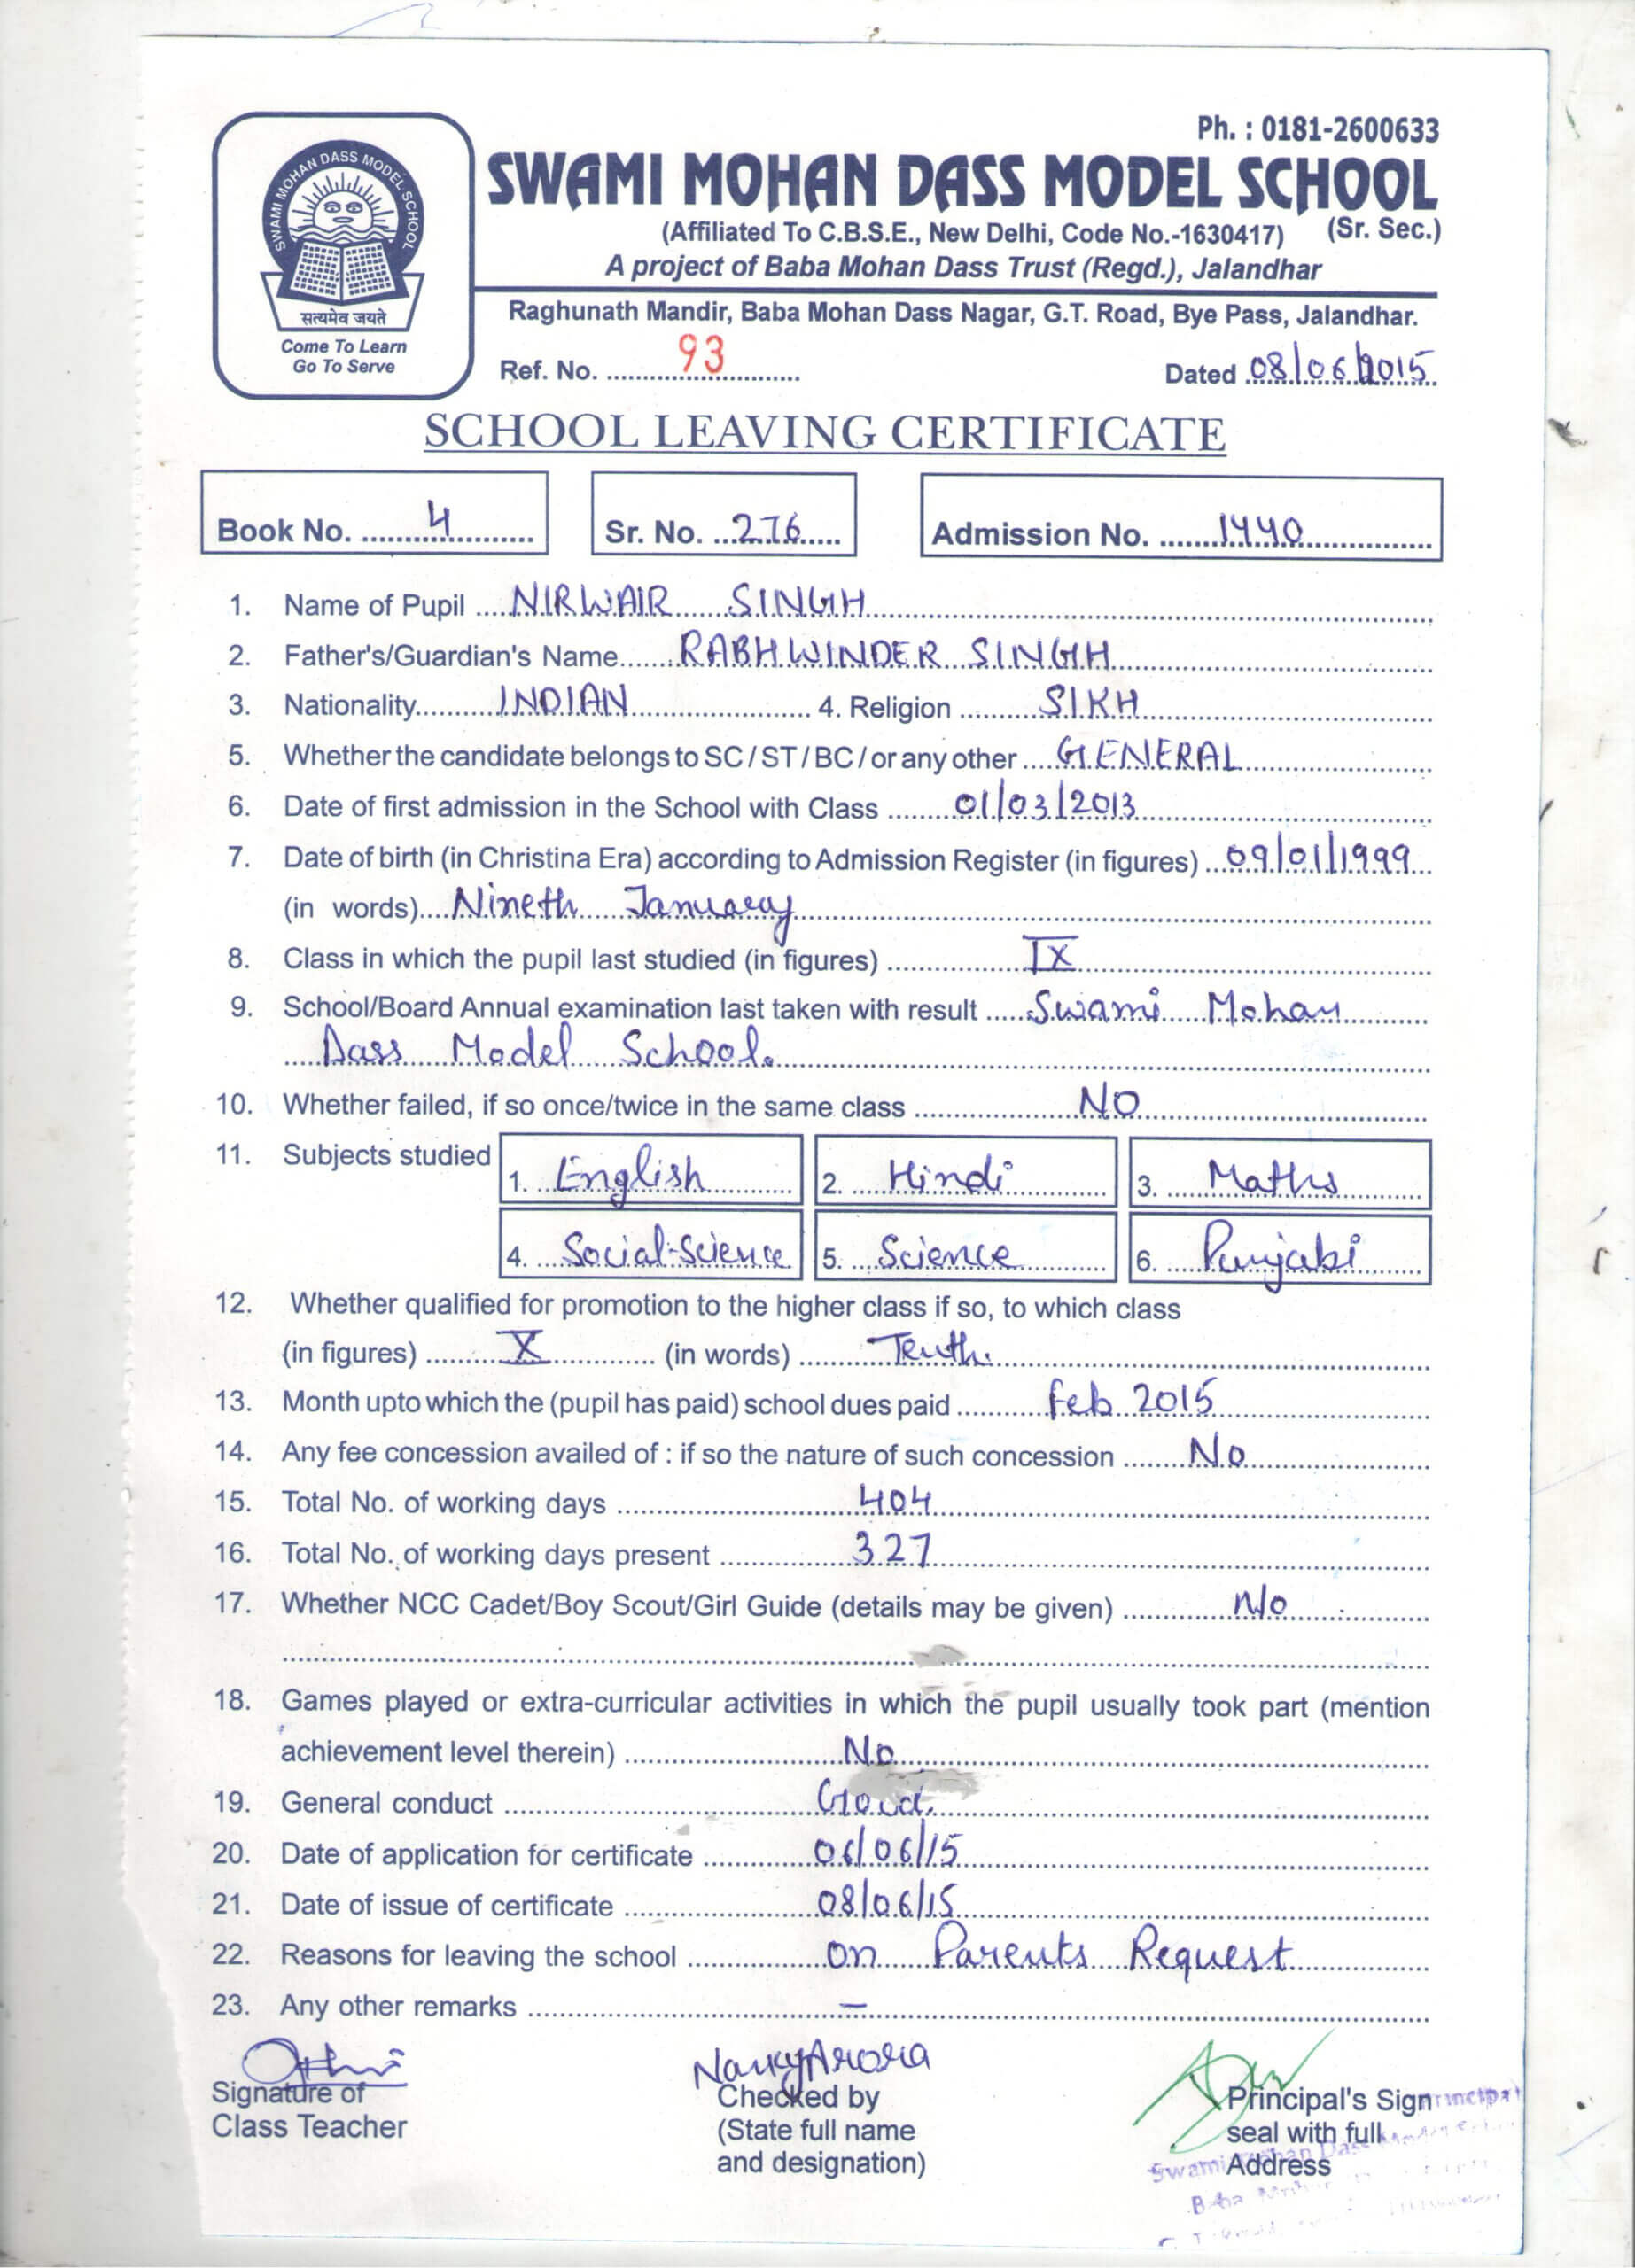 File First School Leaving Certificate Wikimedia Commons With School Leaving Certificate Template